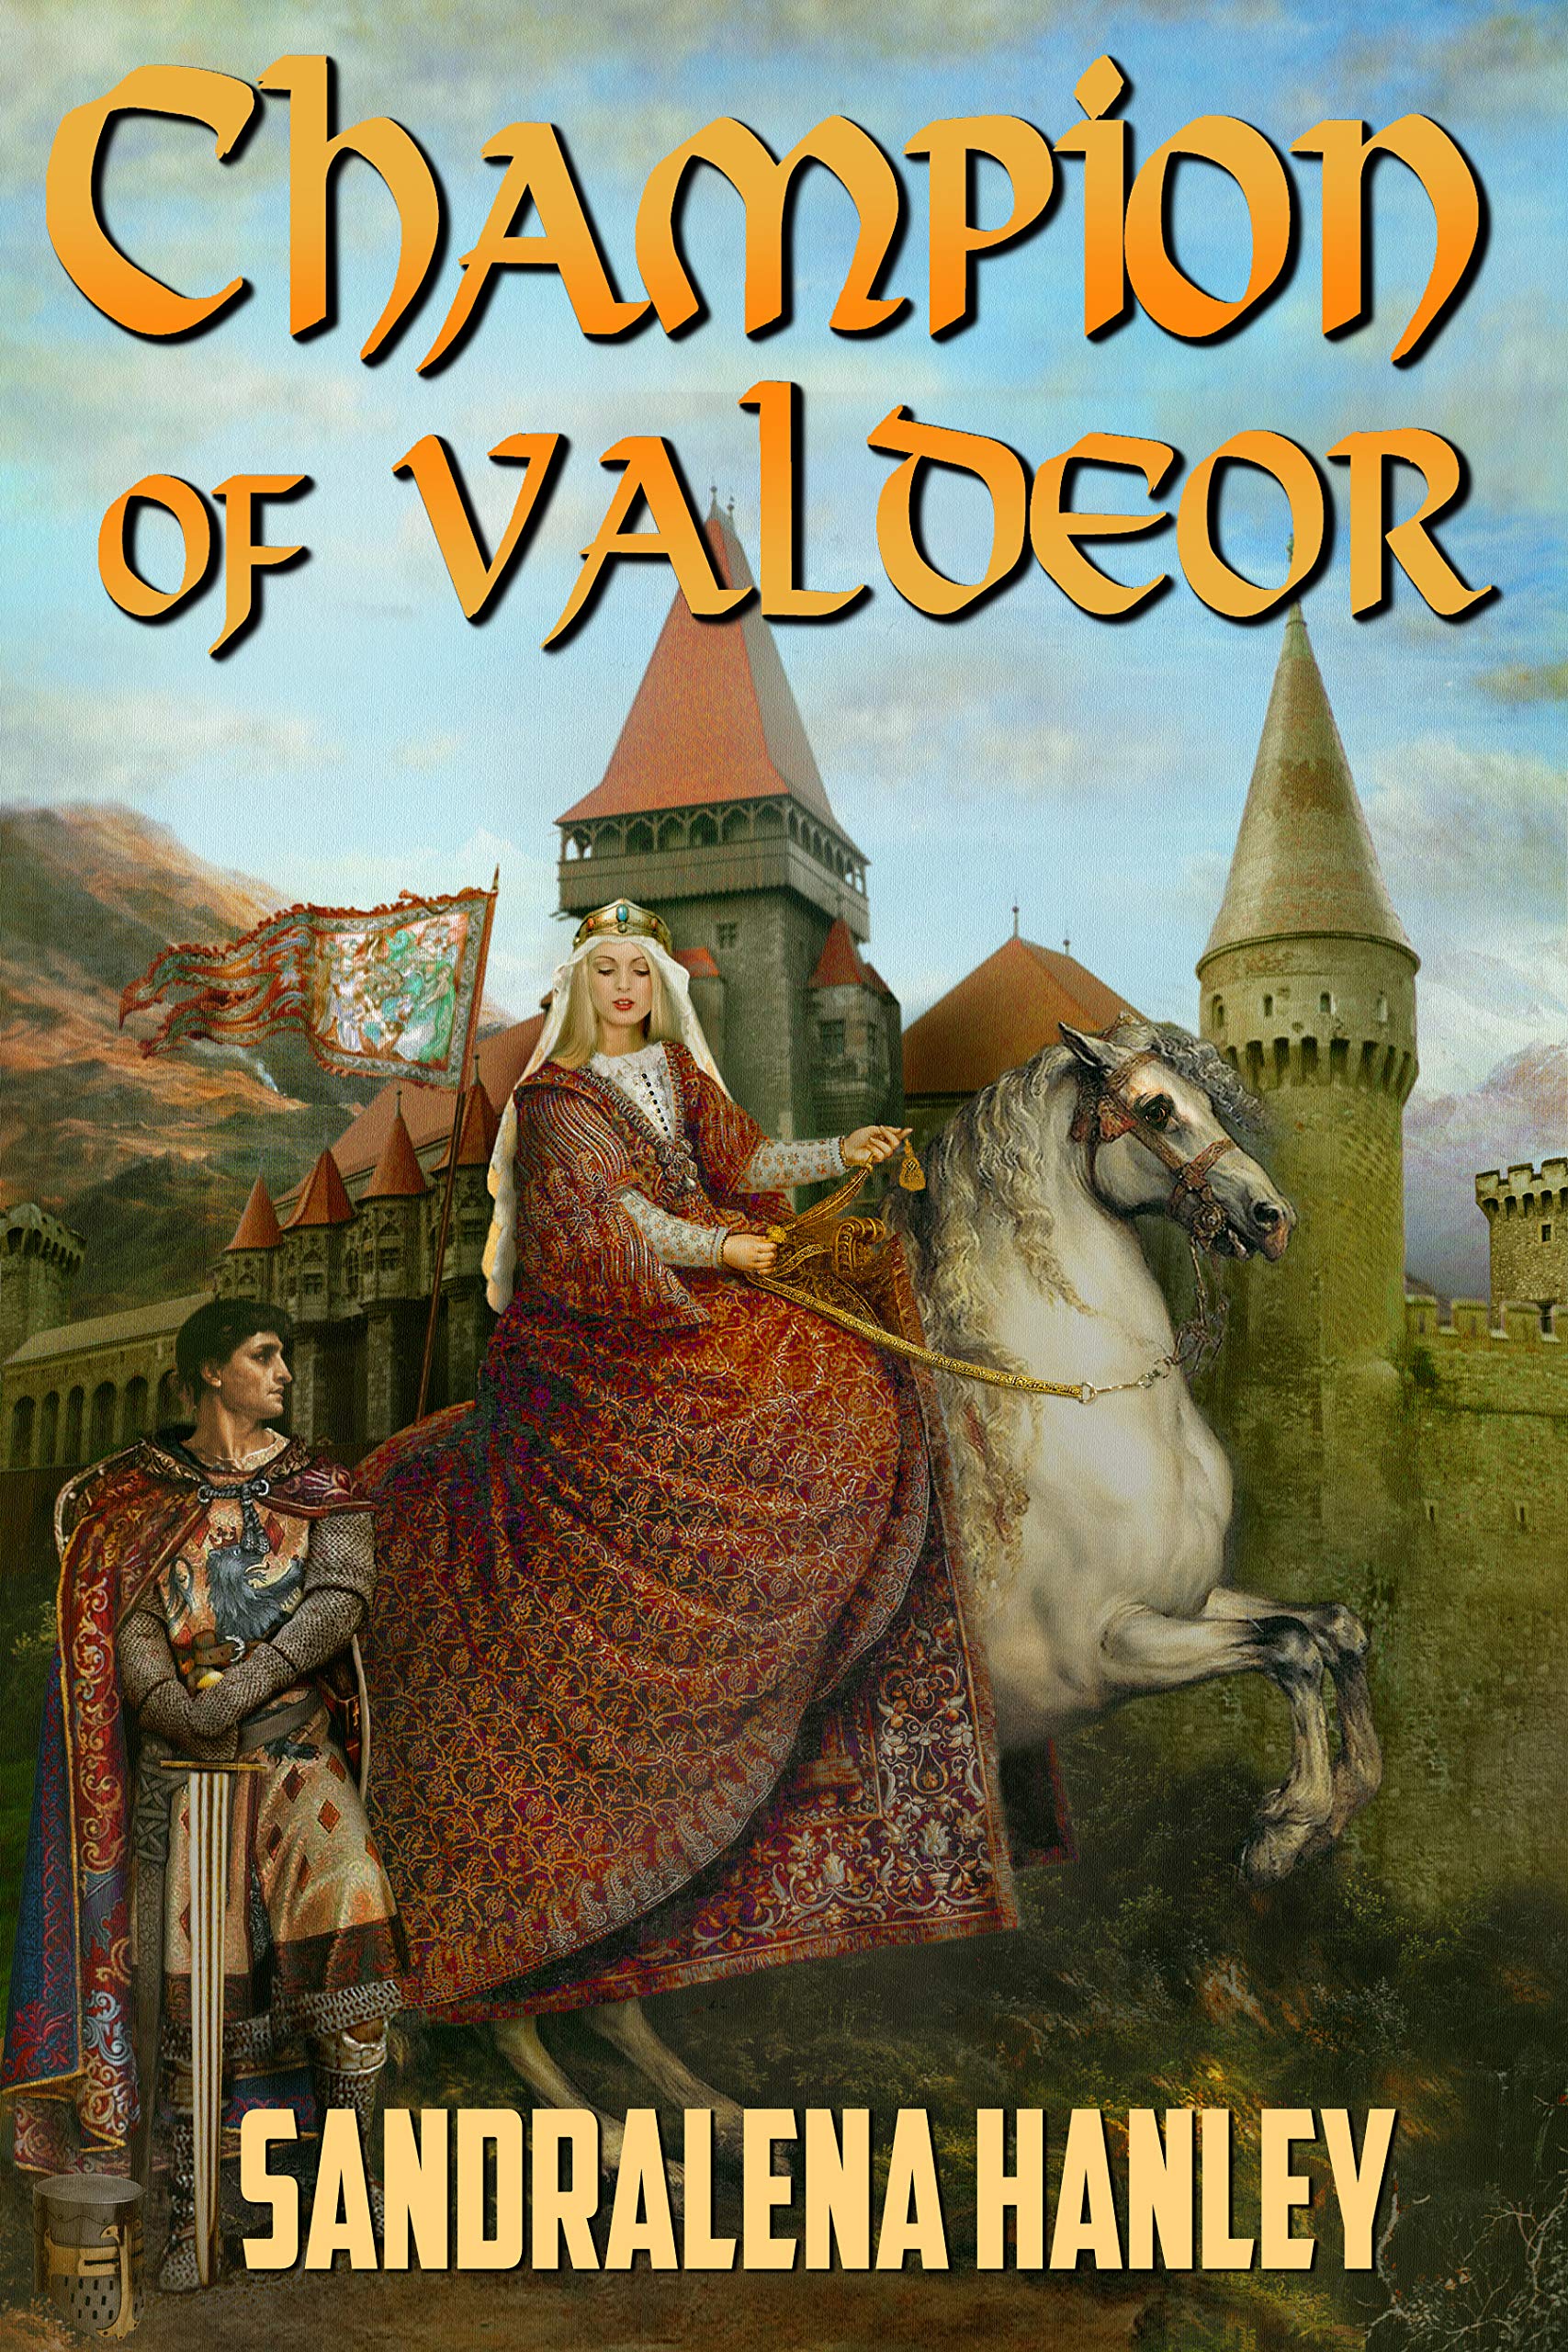 Champion of Valdeor